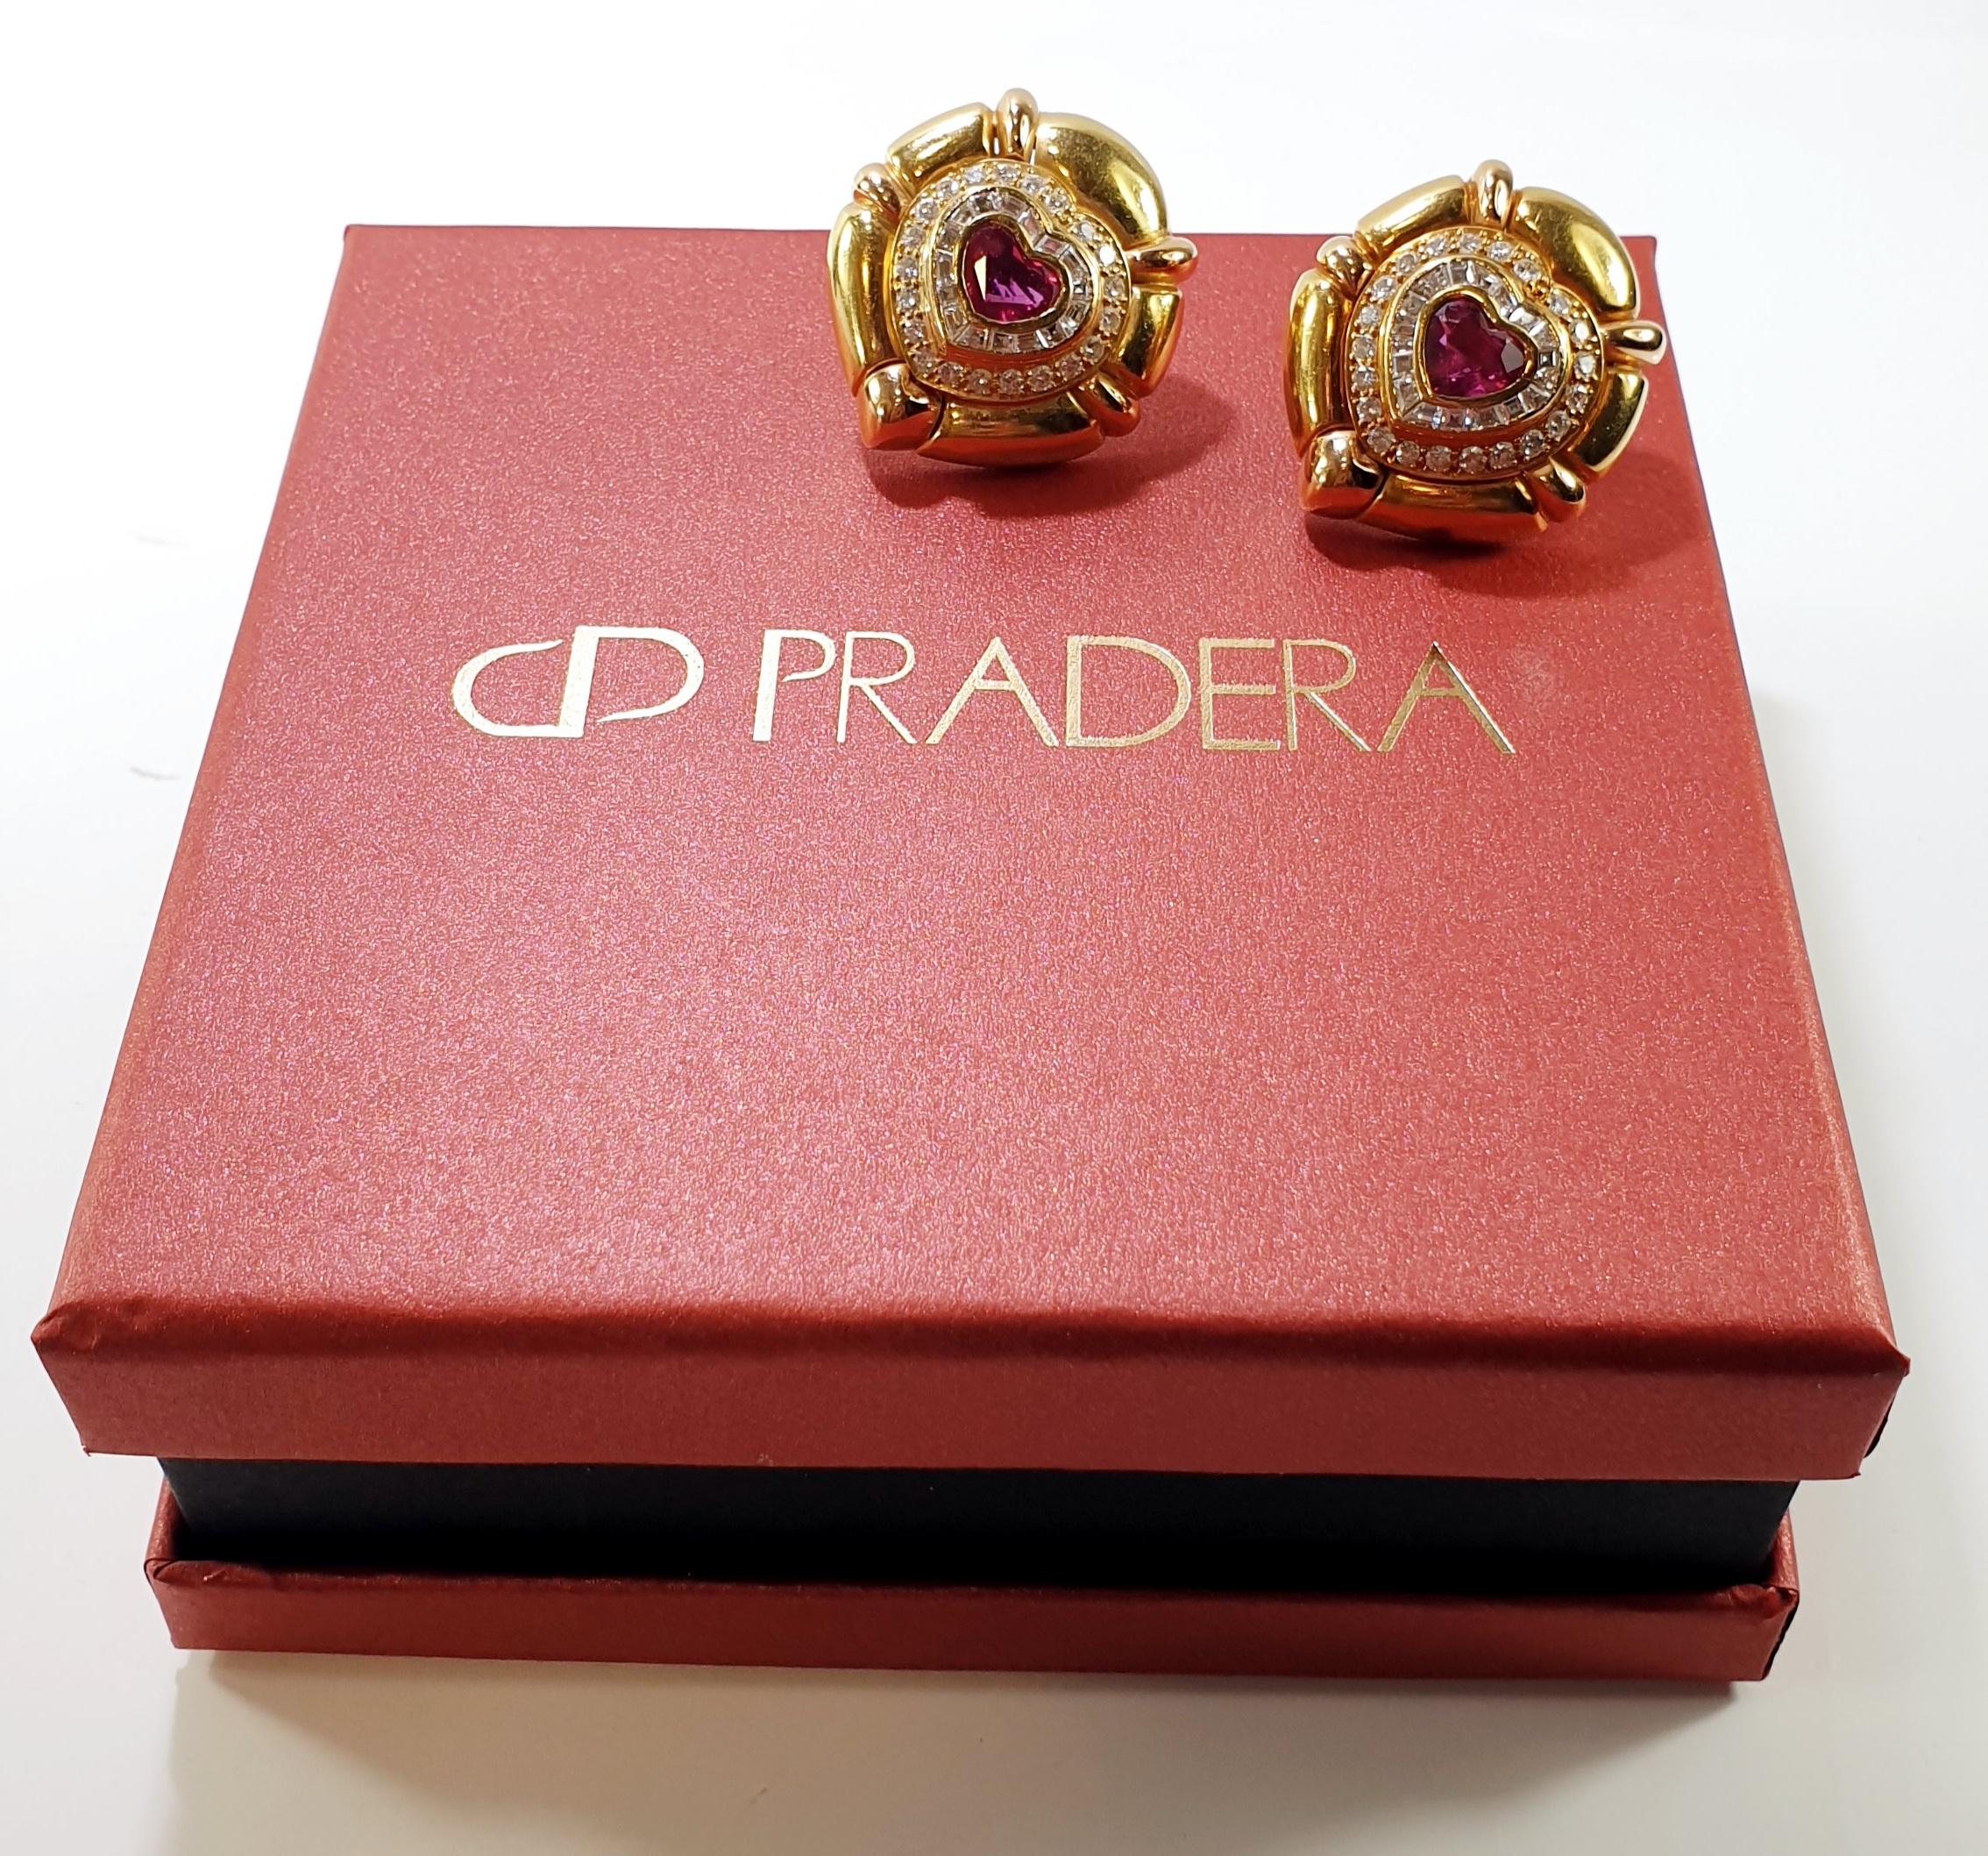 Pradera 18k Gold Bulgary Style Earrings with Diamonds and Burma Heart Ruby For Sale 1